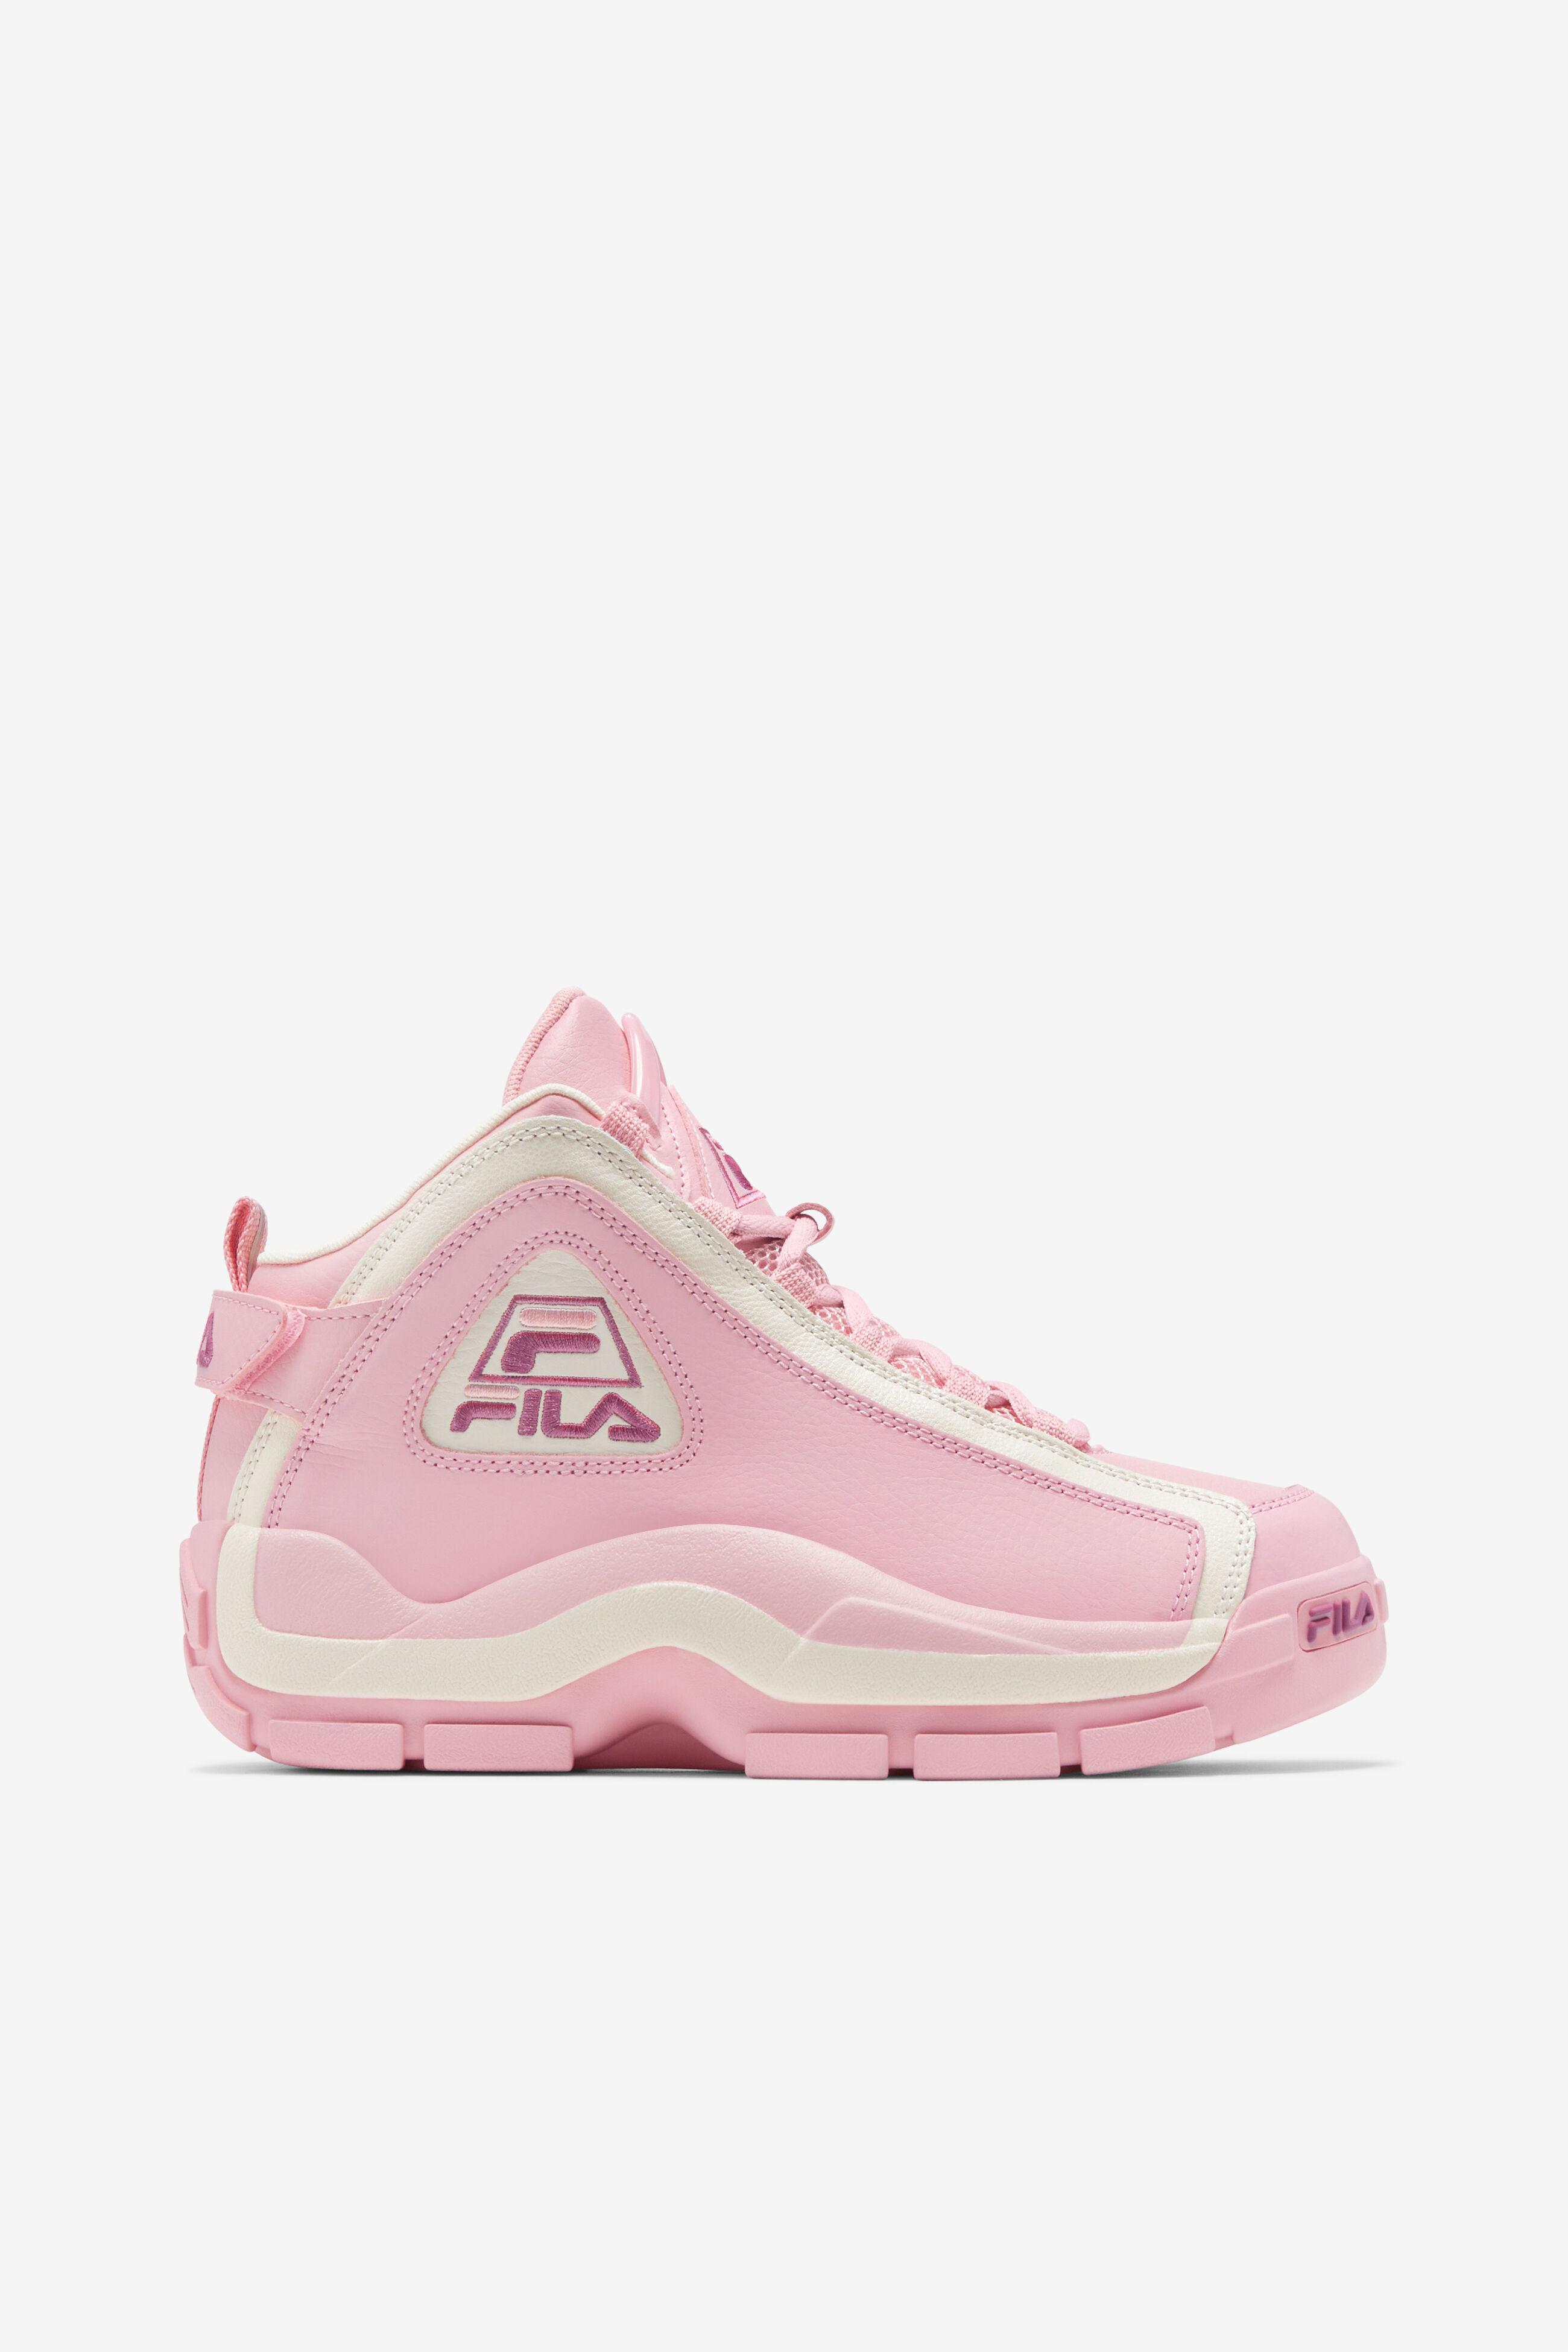 Grant Hill 2 Women's Pink Basketball Sneakers | Fila 5BM01755